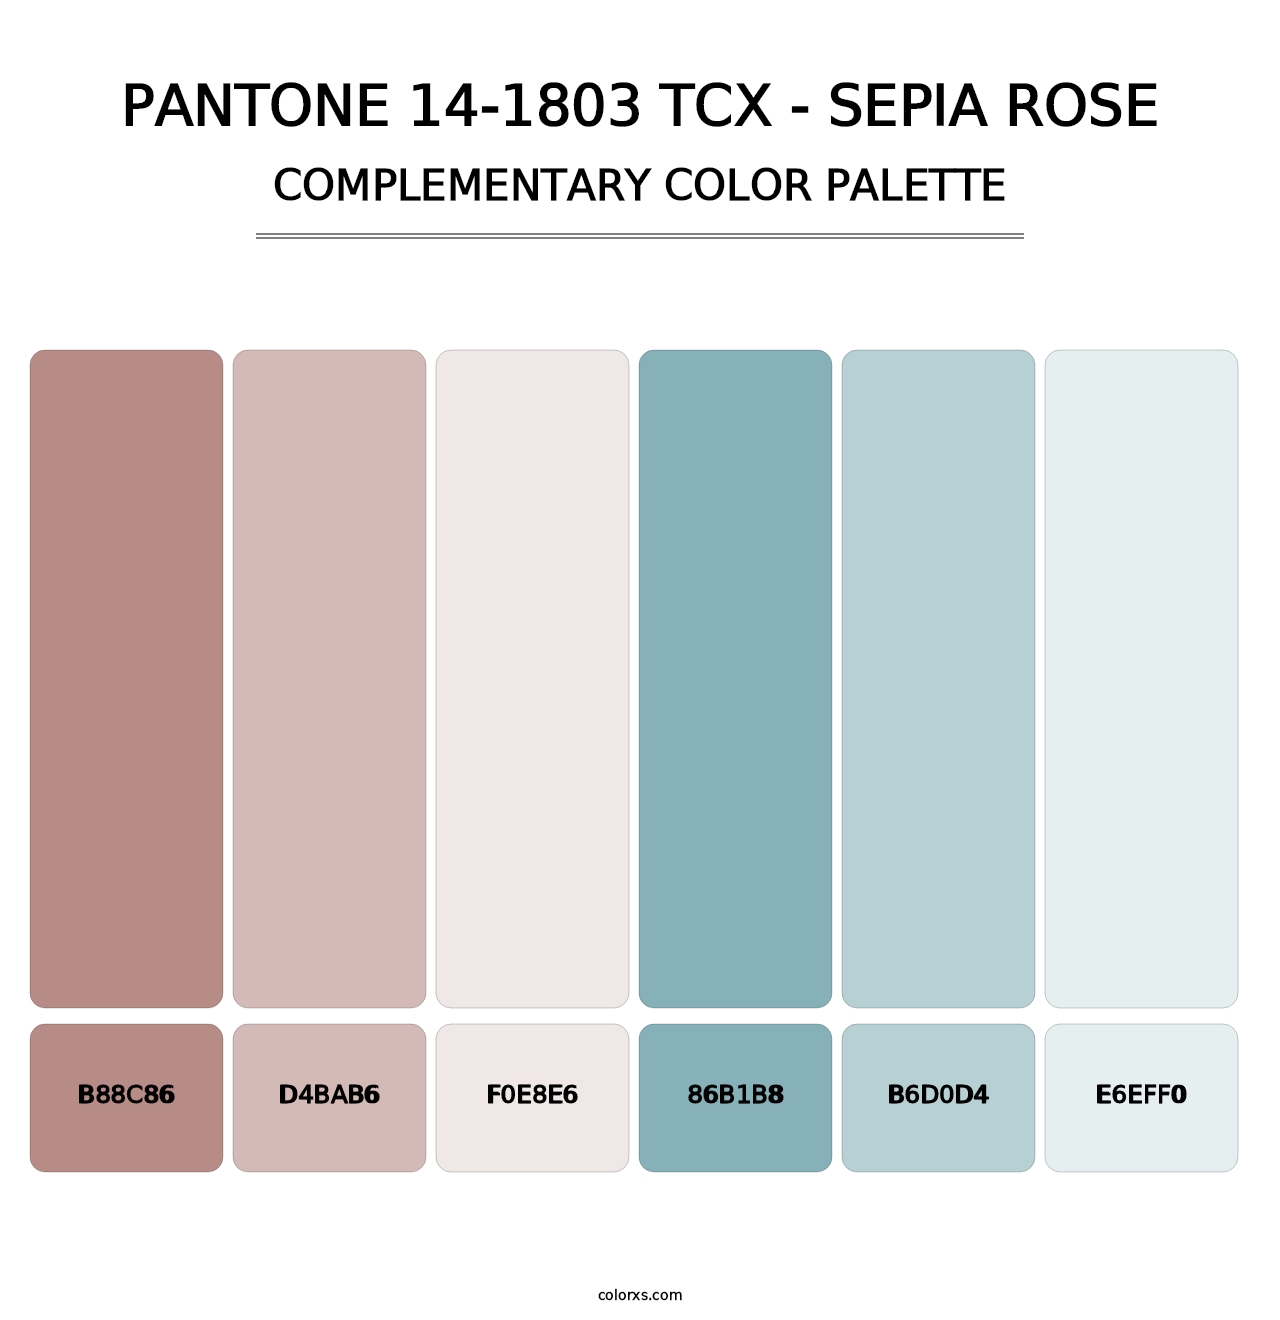 PANTONE 14-1803 TCX - Sepia Rose - Complementary Color Palette